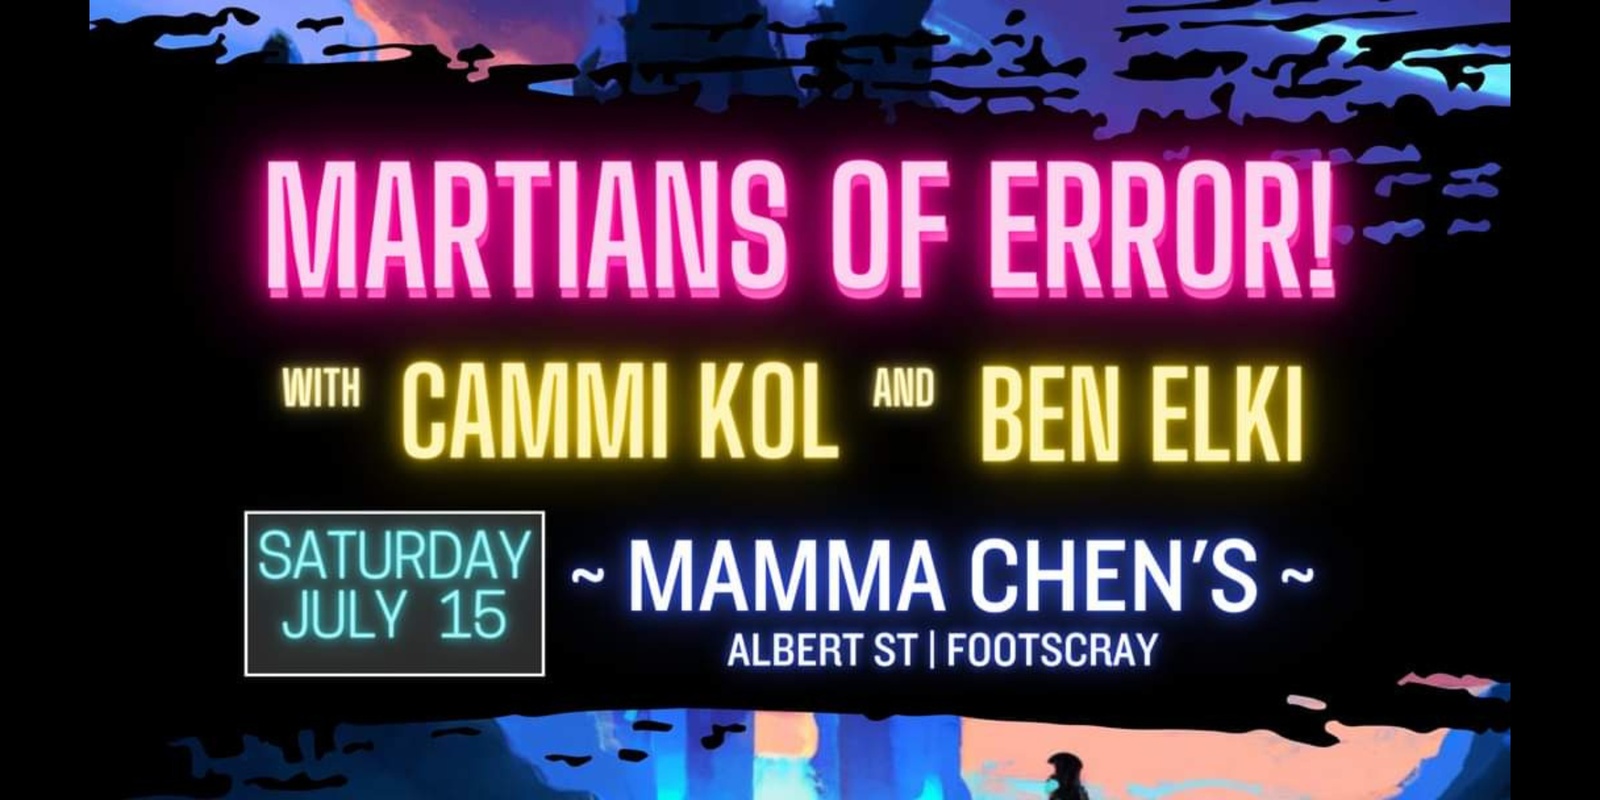 Banner image for Martians of Error @ Mamma Chen's feat. Cammi Kol & Ben Elki